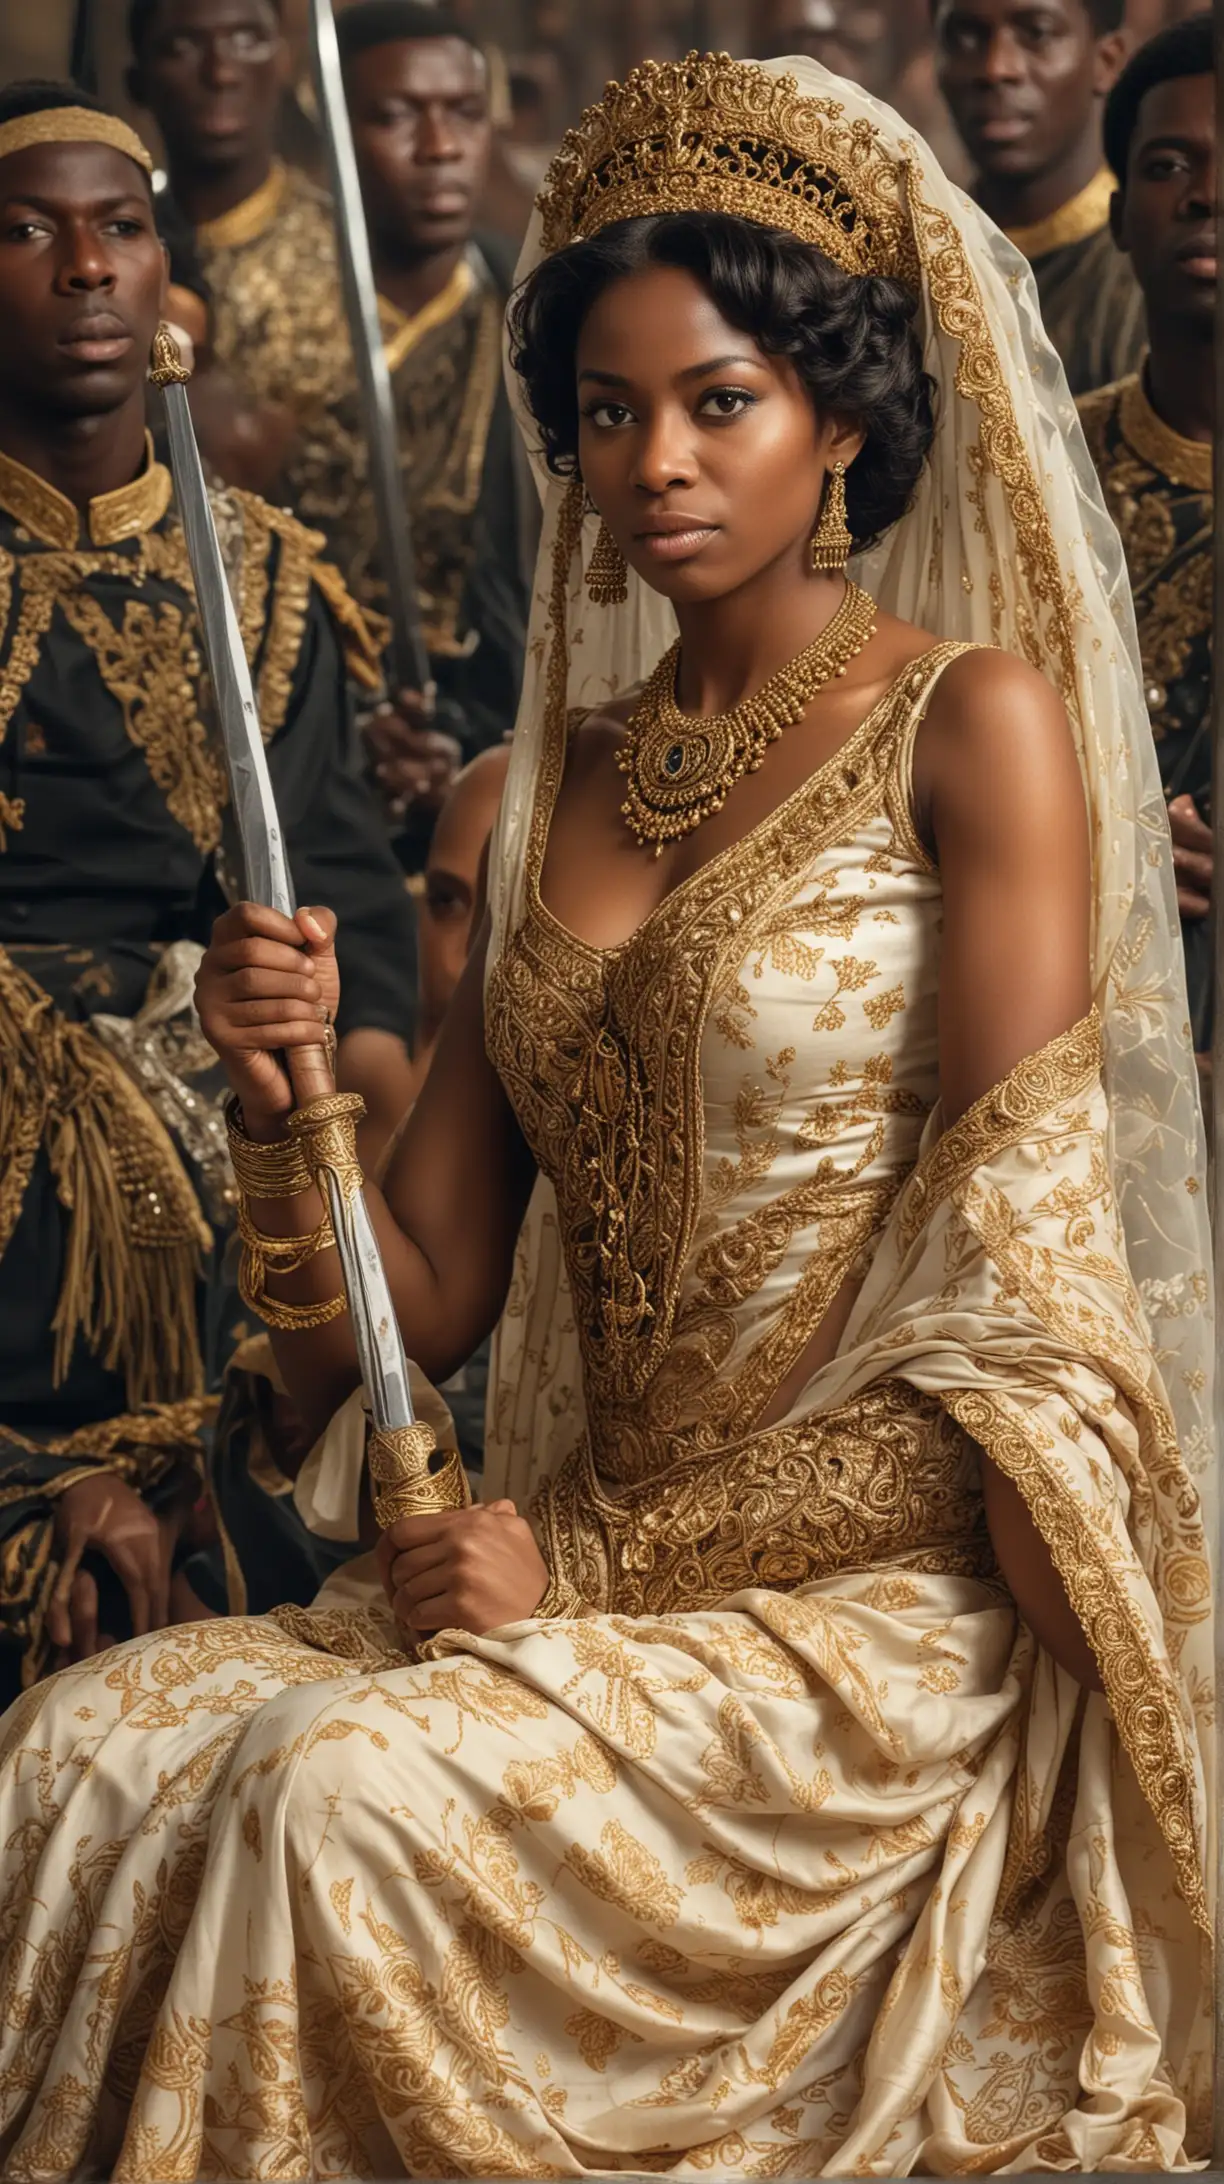 Zingadi Female Ruler of Angola Seated in Light Sari Dress with Sword